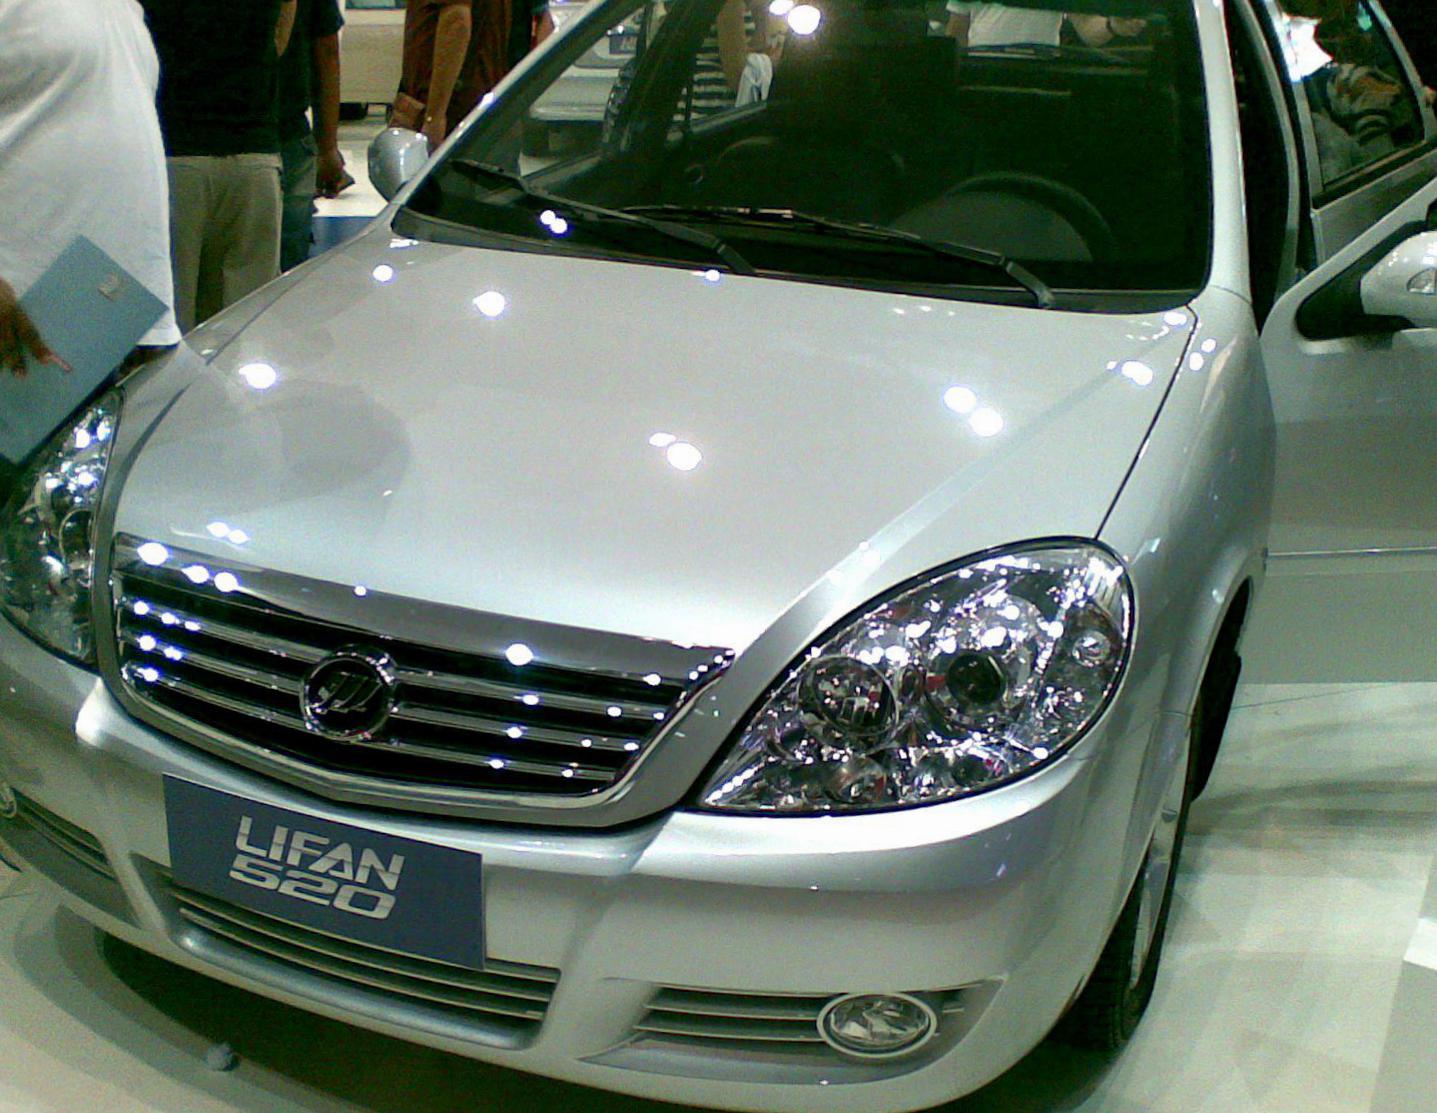 Lifan 520 new hatchback